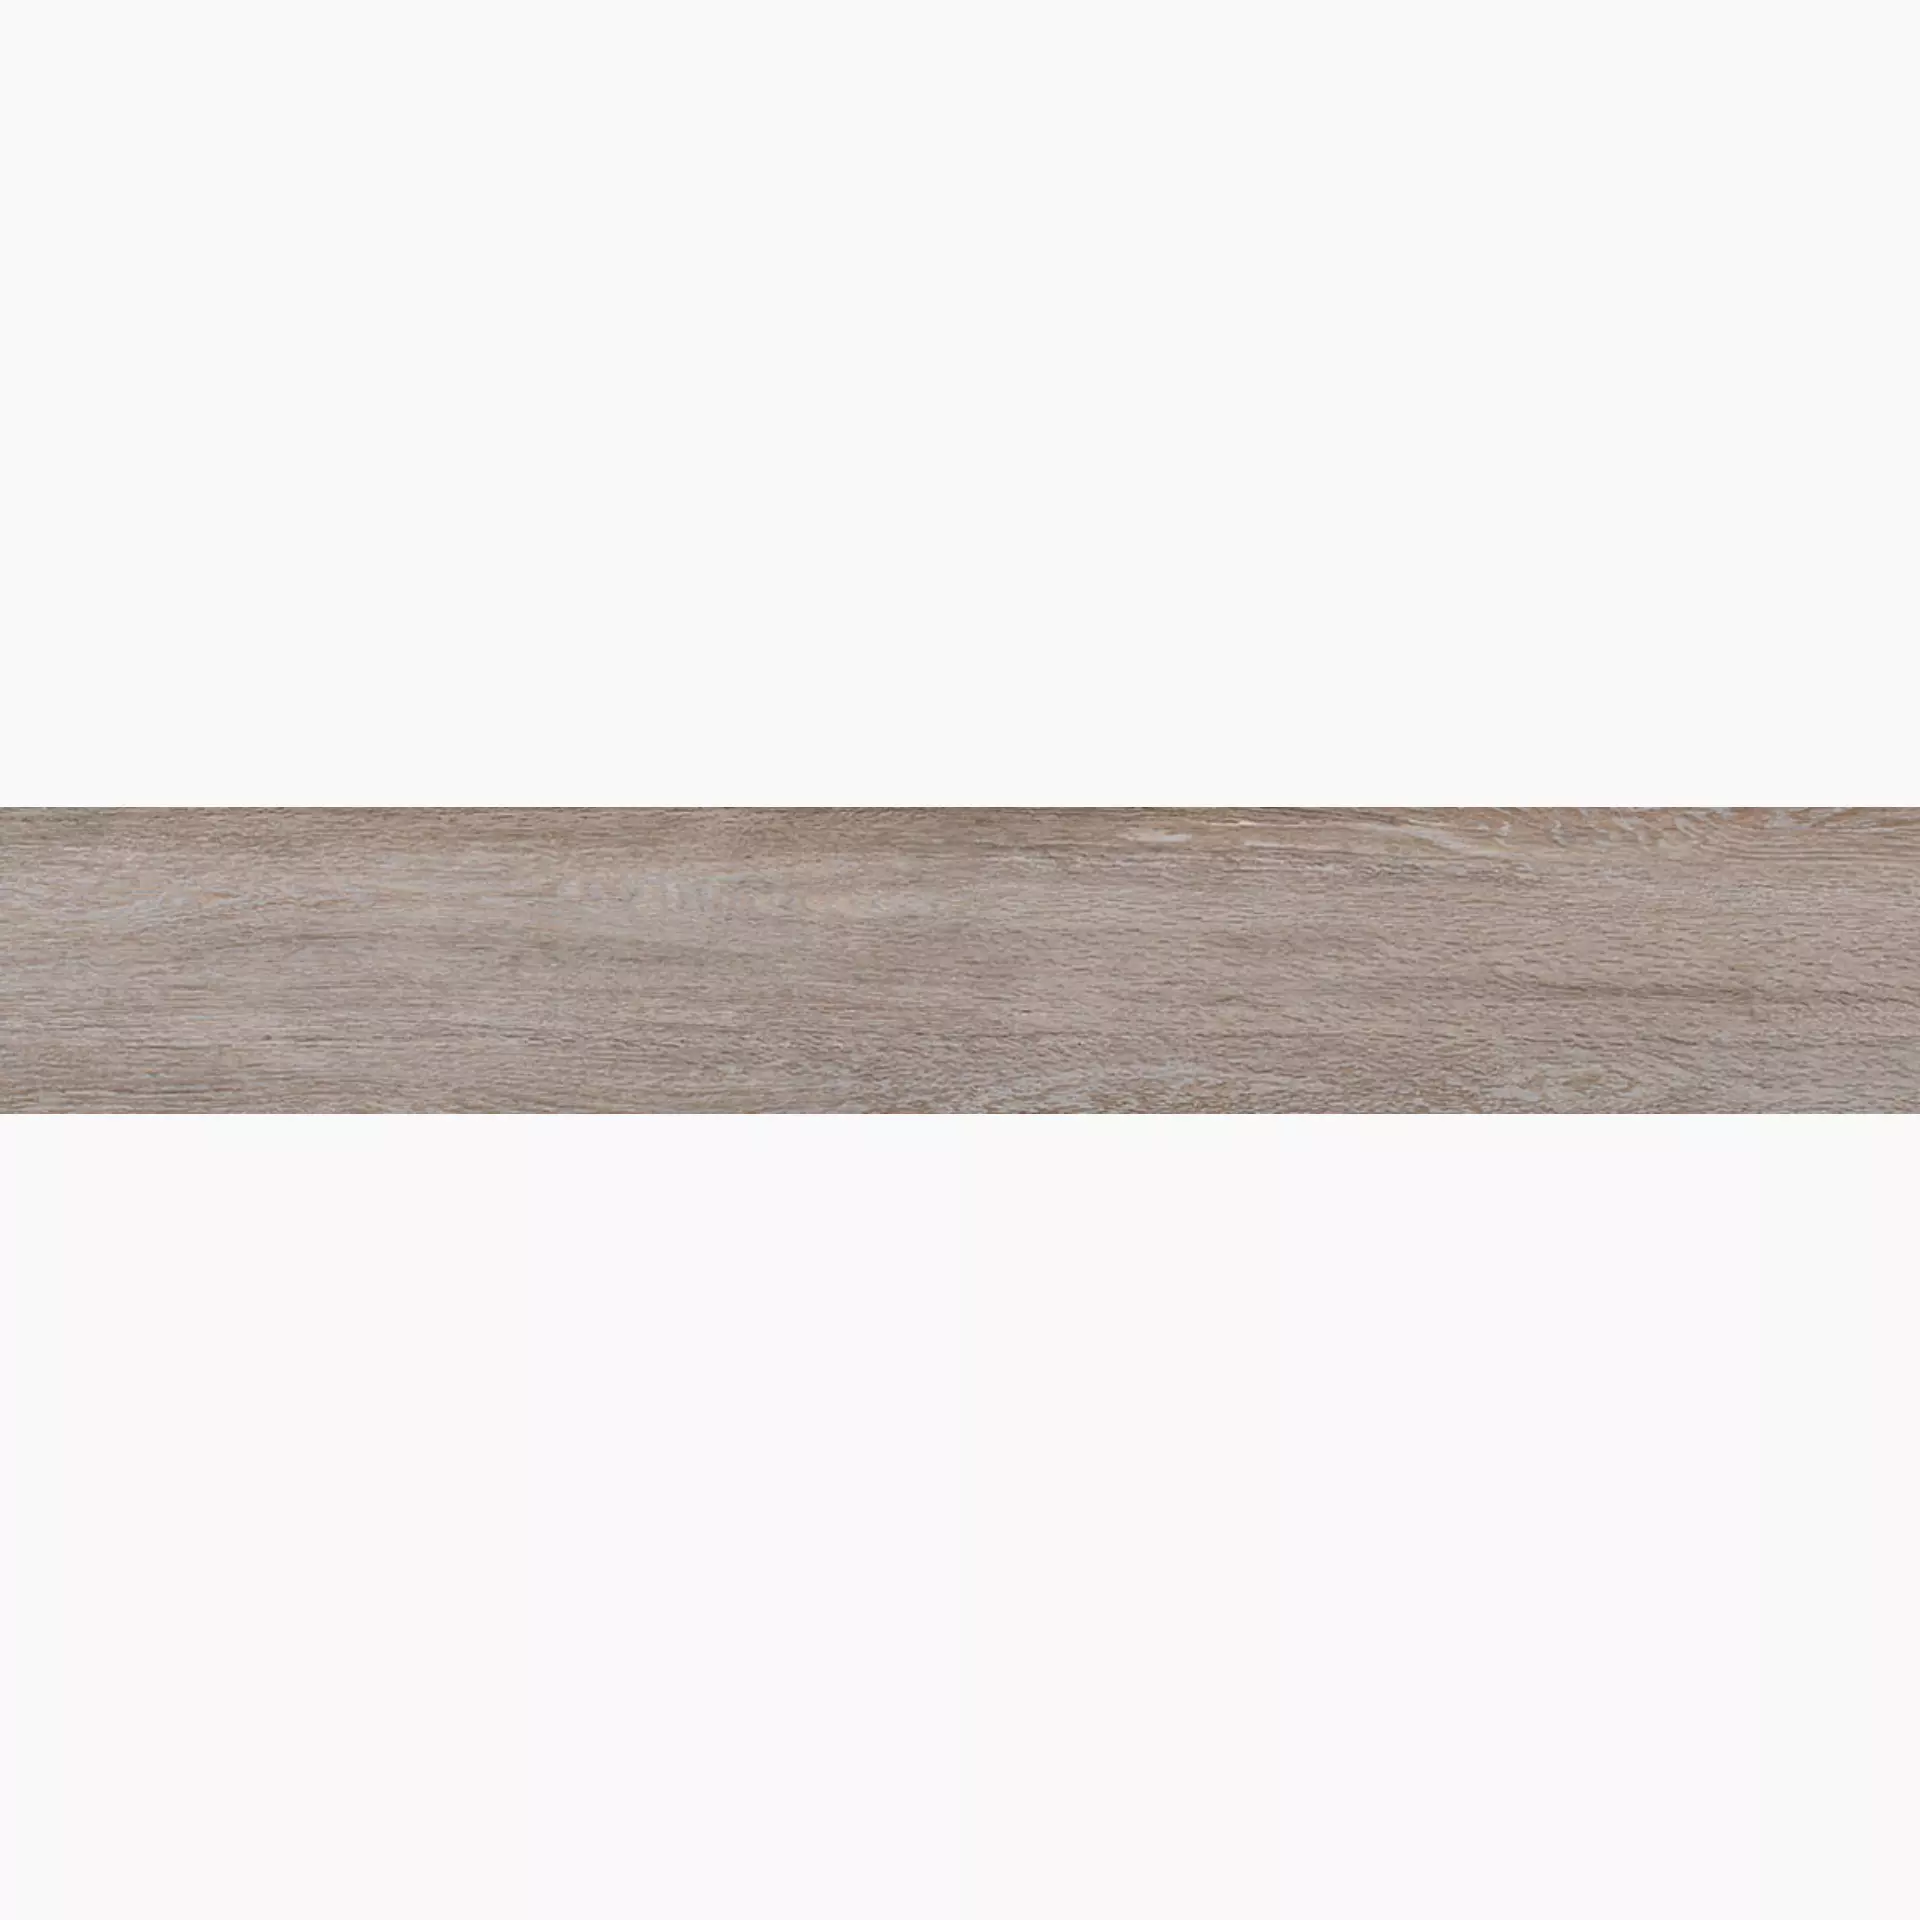 La Faenza Legno Brown Natural Slate Cut Matt 168056 20x120cm rectified 10mm - LEGNO 2012T RM